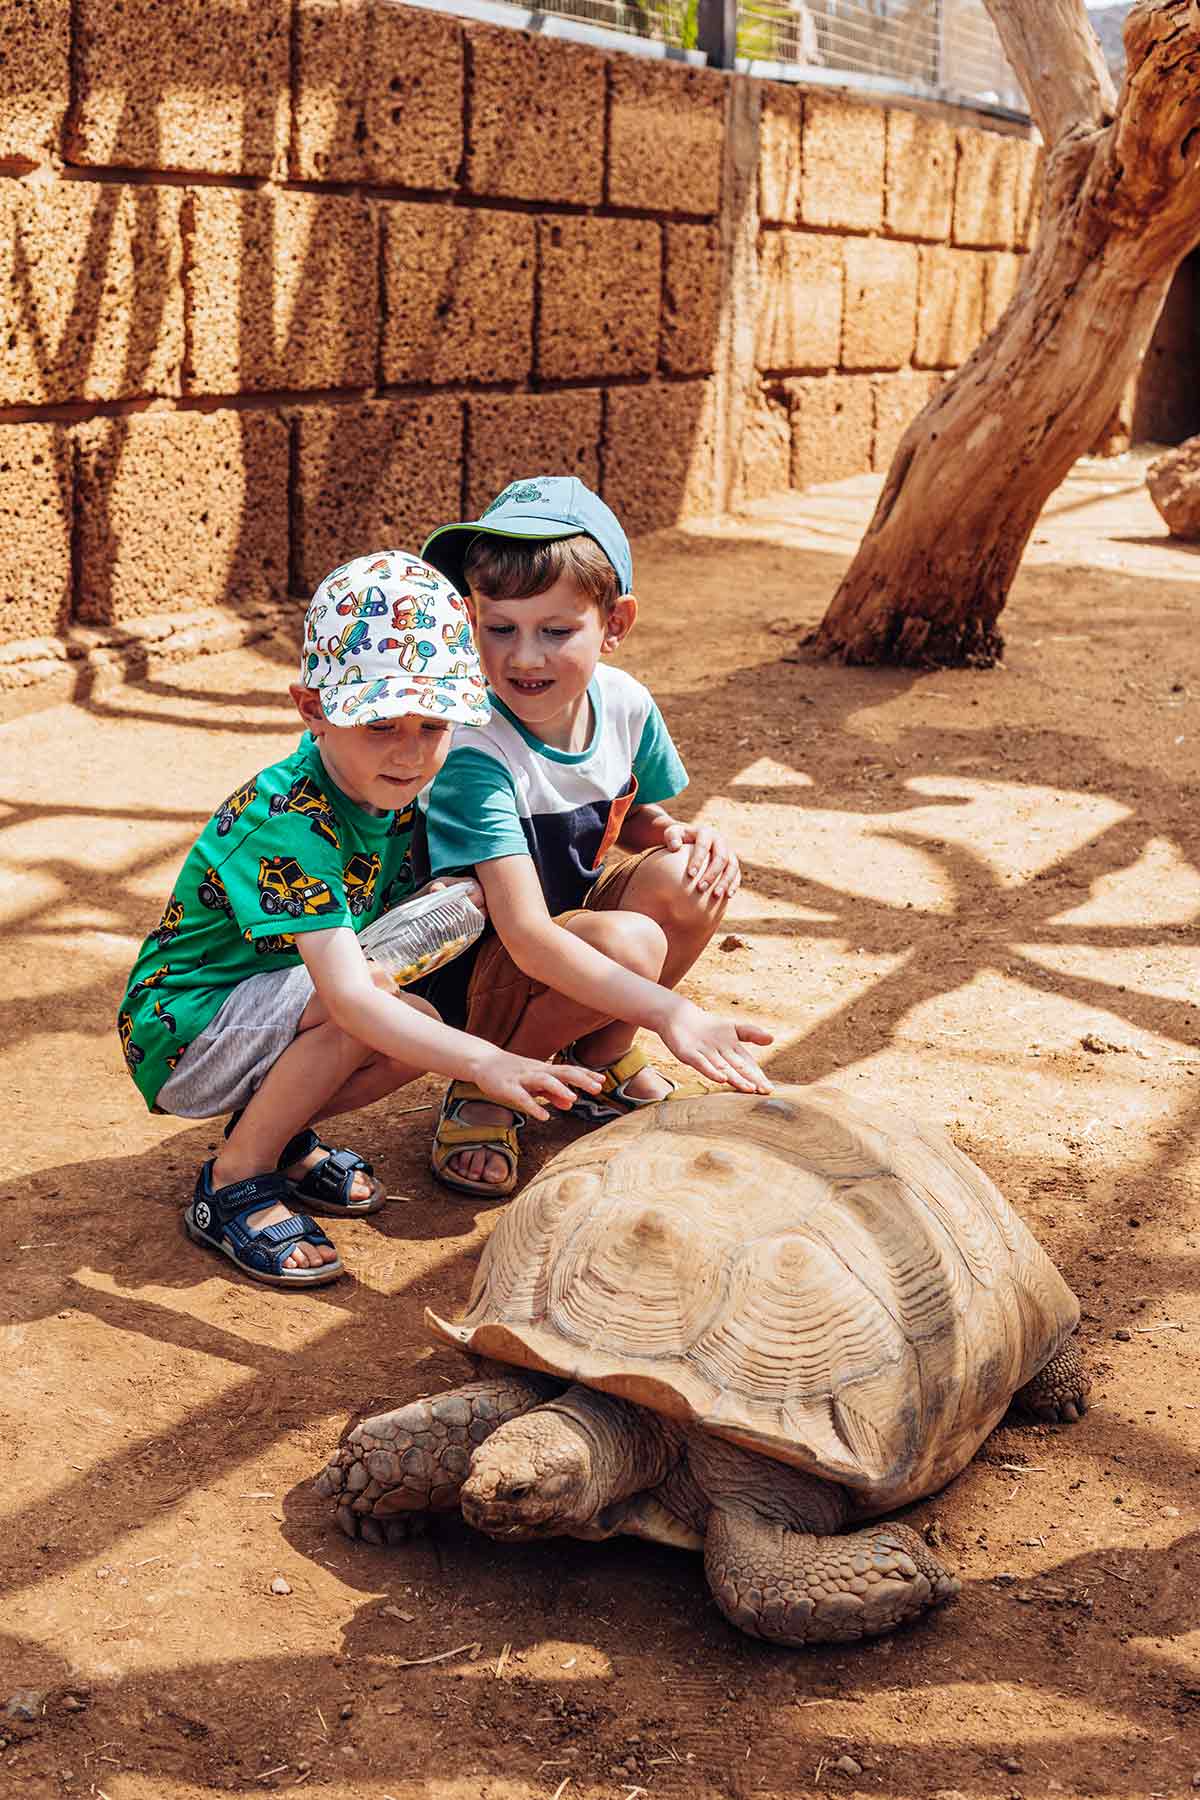 A giant tortoise in Monkey Park, Tenerife